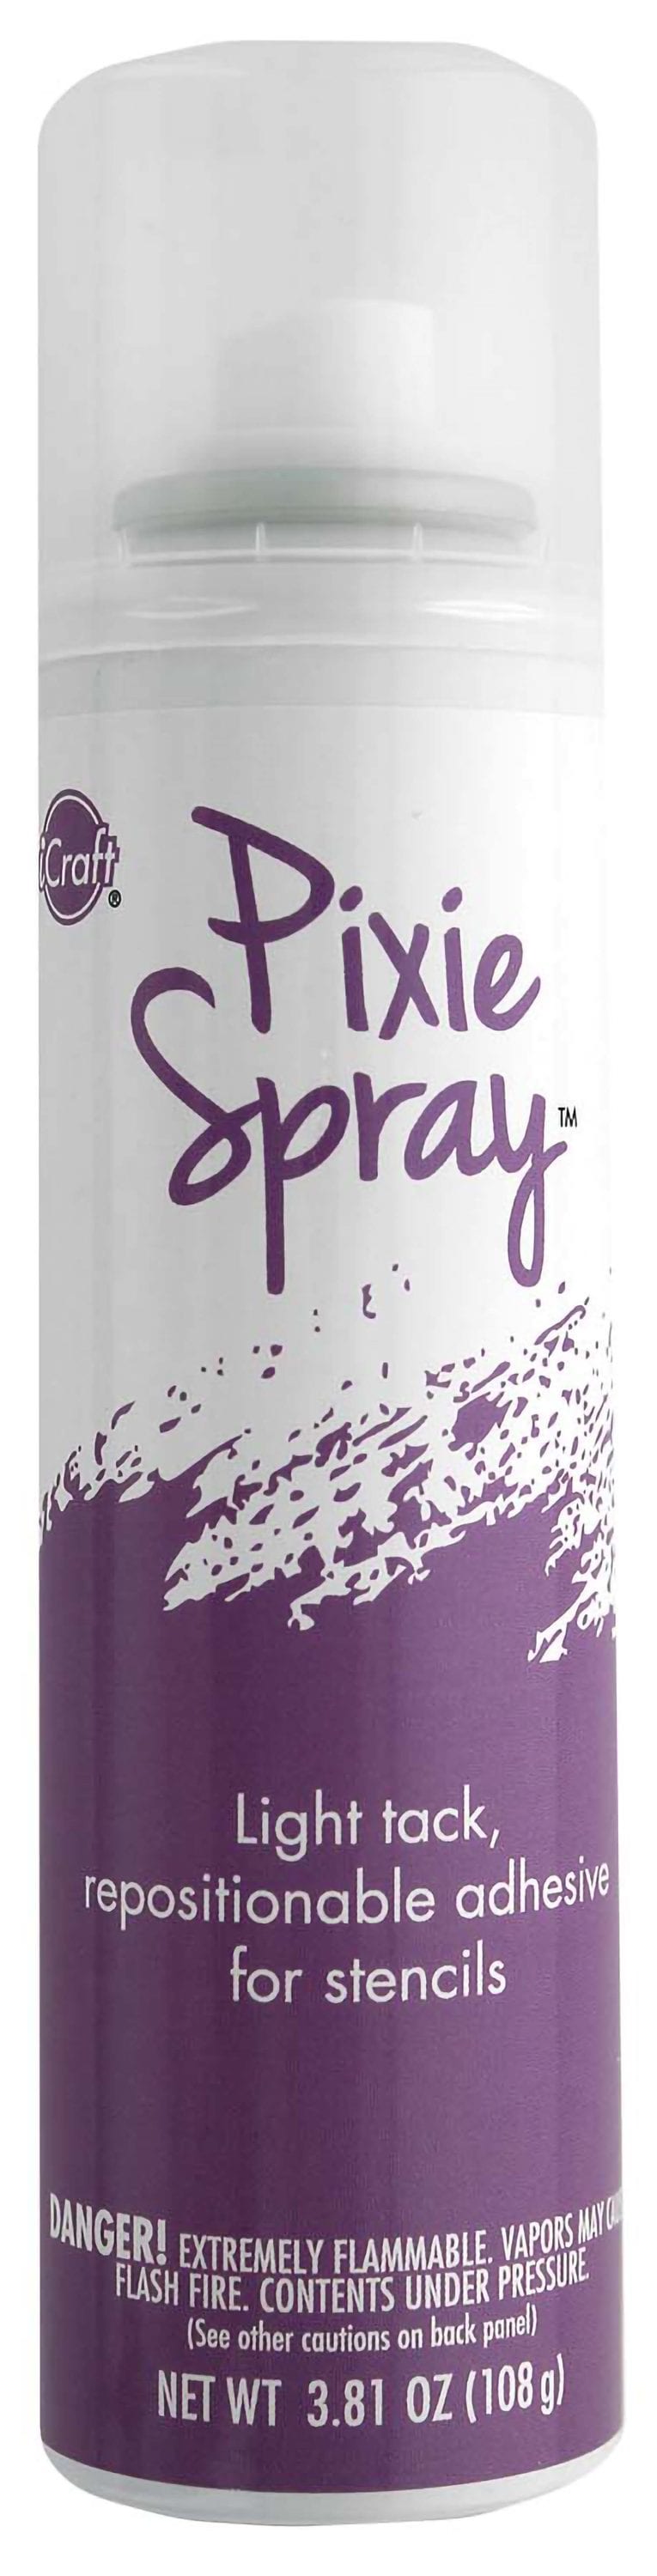 iCraft Pixie Spray Stencil Sdhesive Repo 3.8Oz 2Pc at